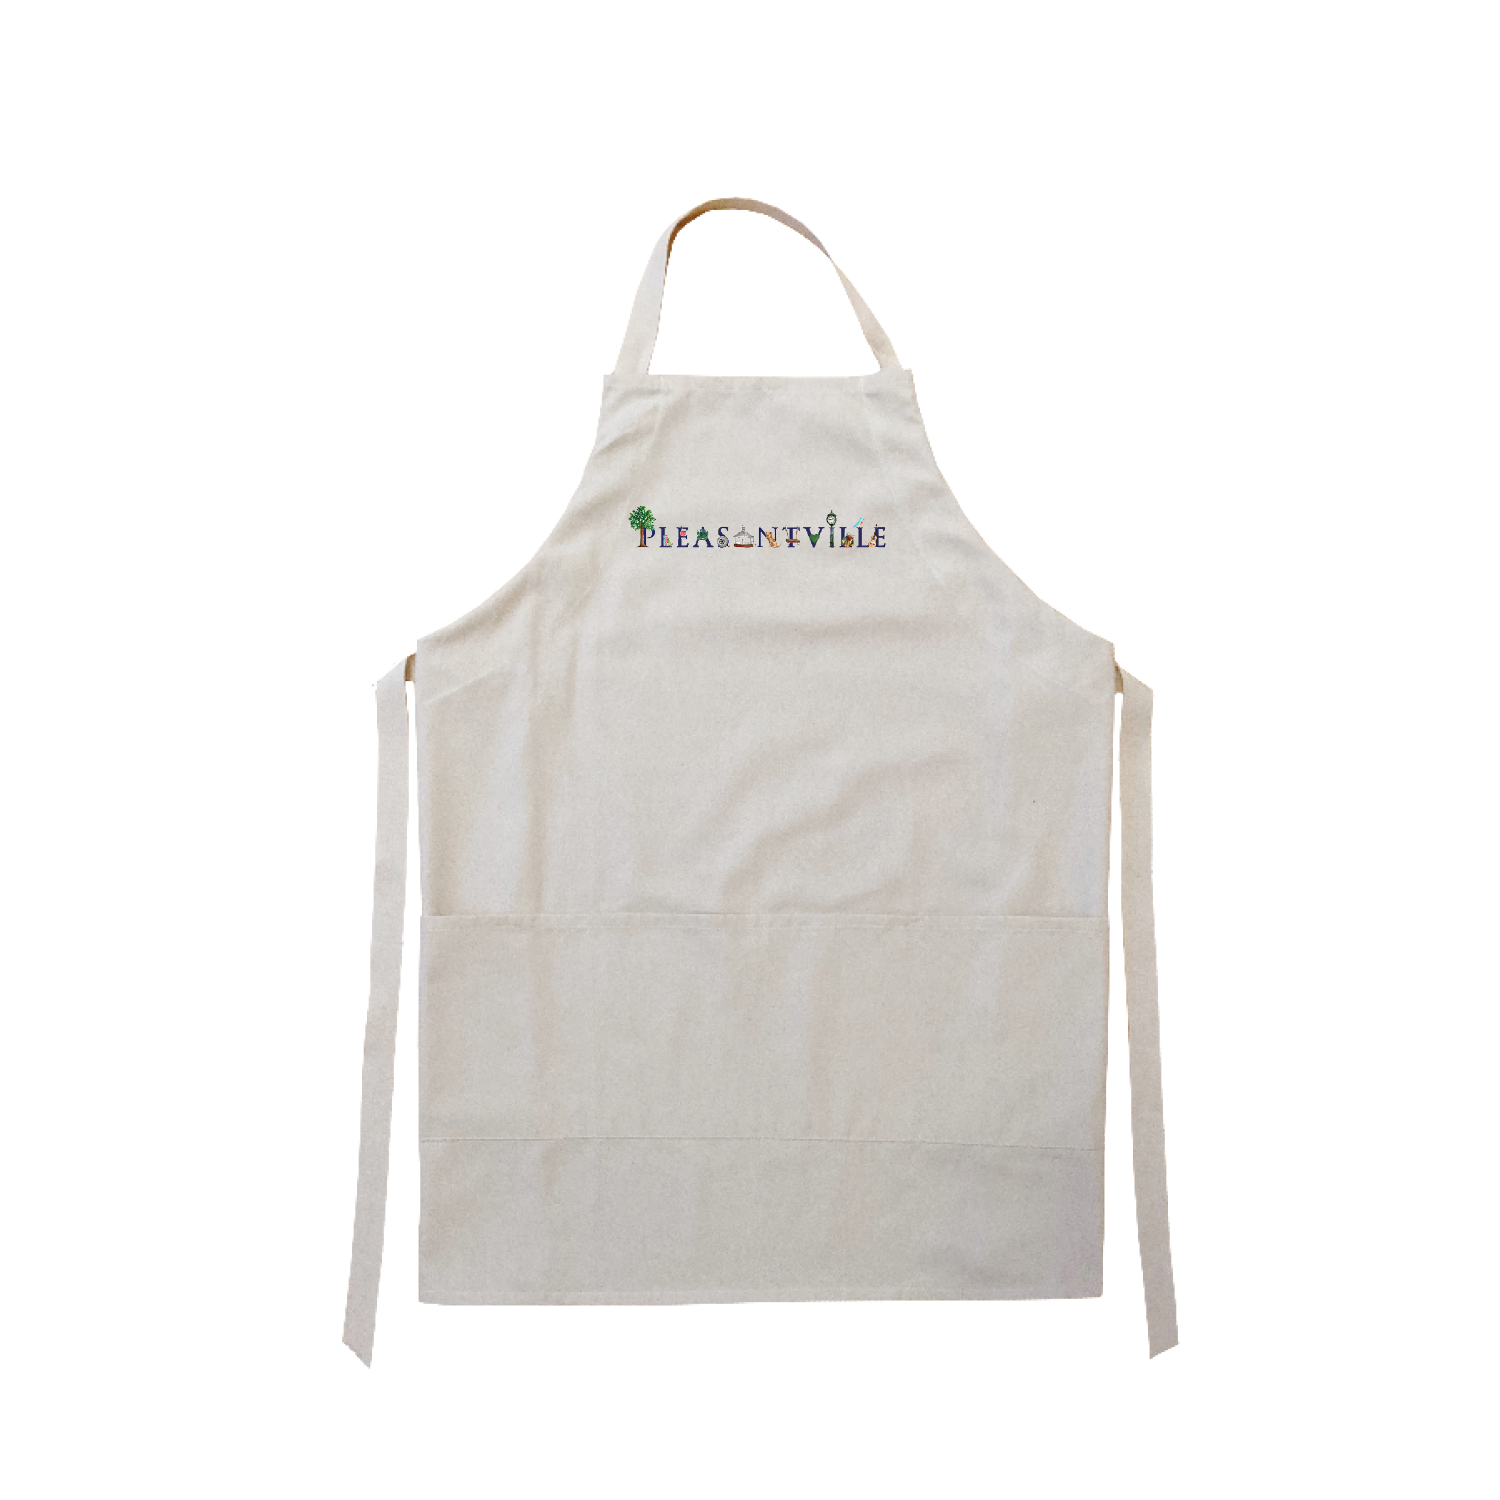 pleasantville apron